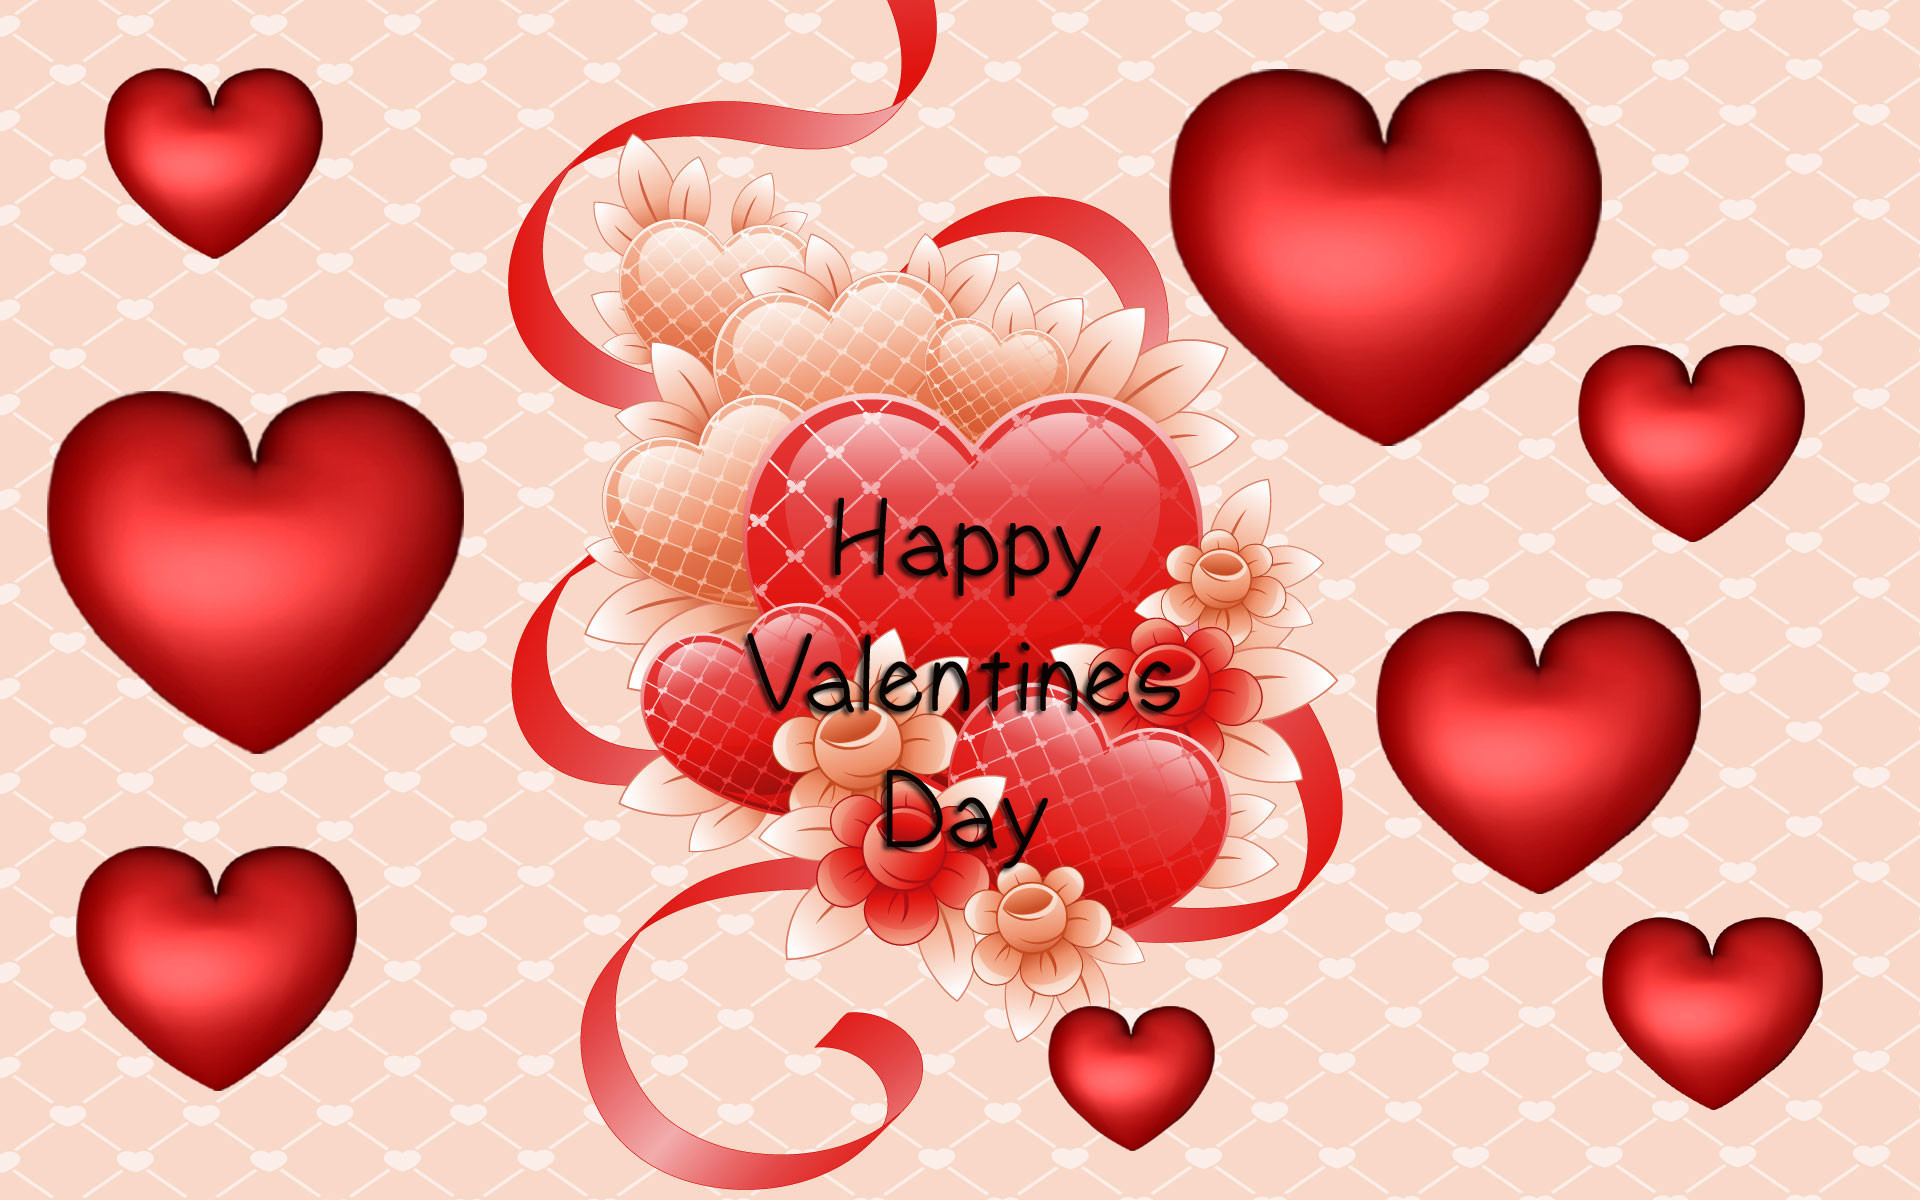 Download Valentine Day Desktop Wallpaper Photos px 327.89 KB Love